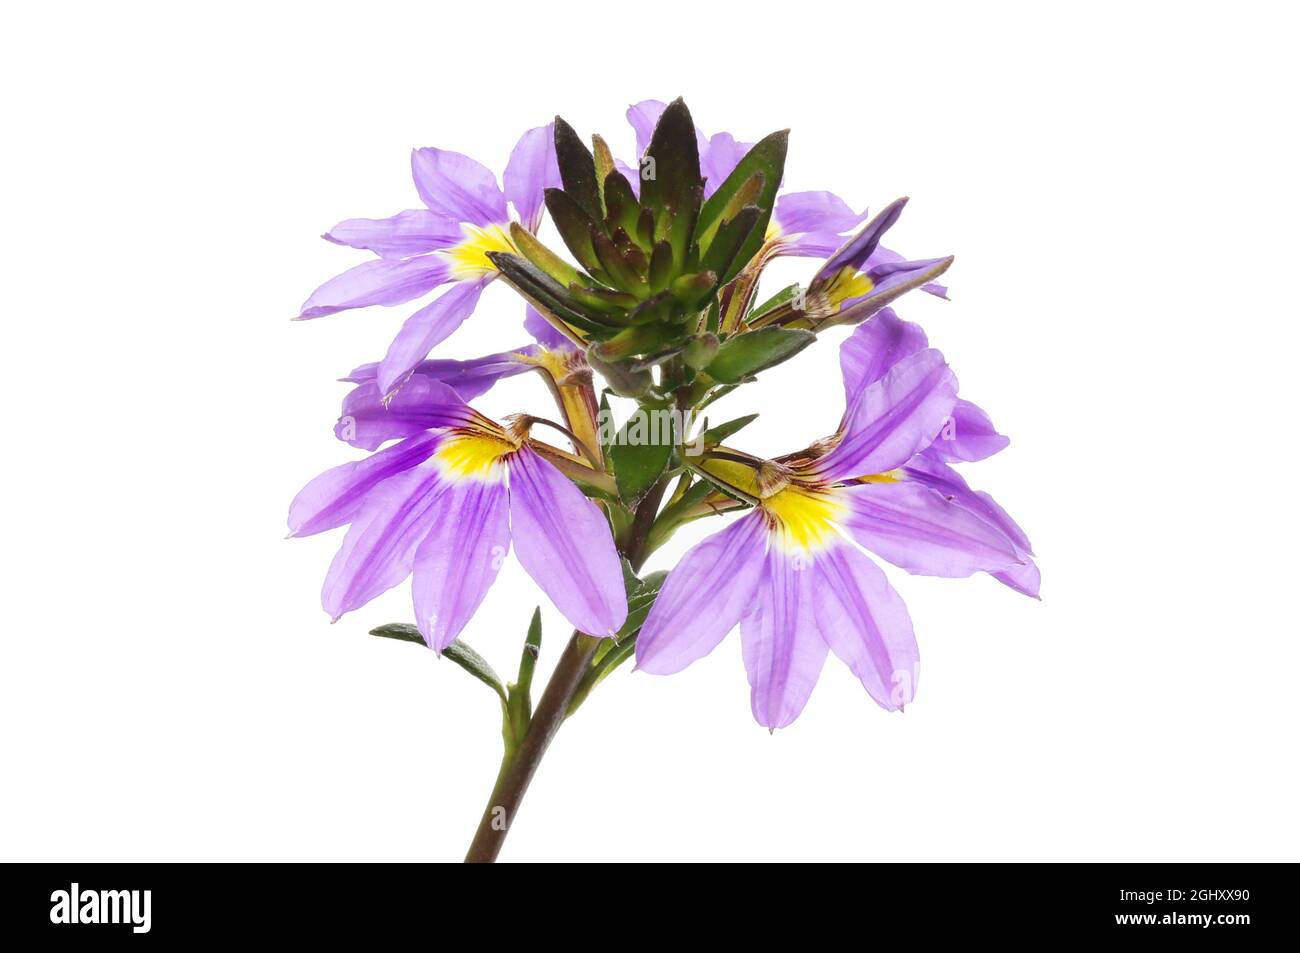 Purple scaevola flowers and foliage isolated against white Stock Photo